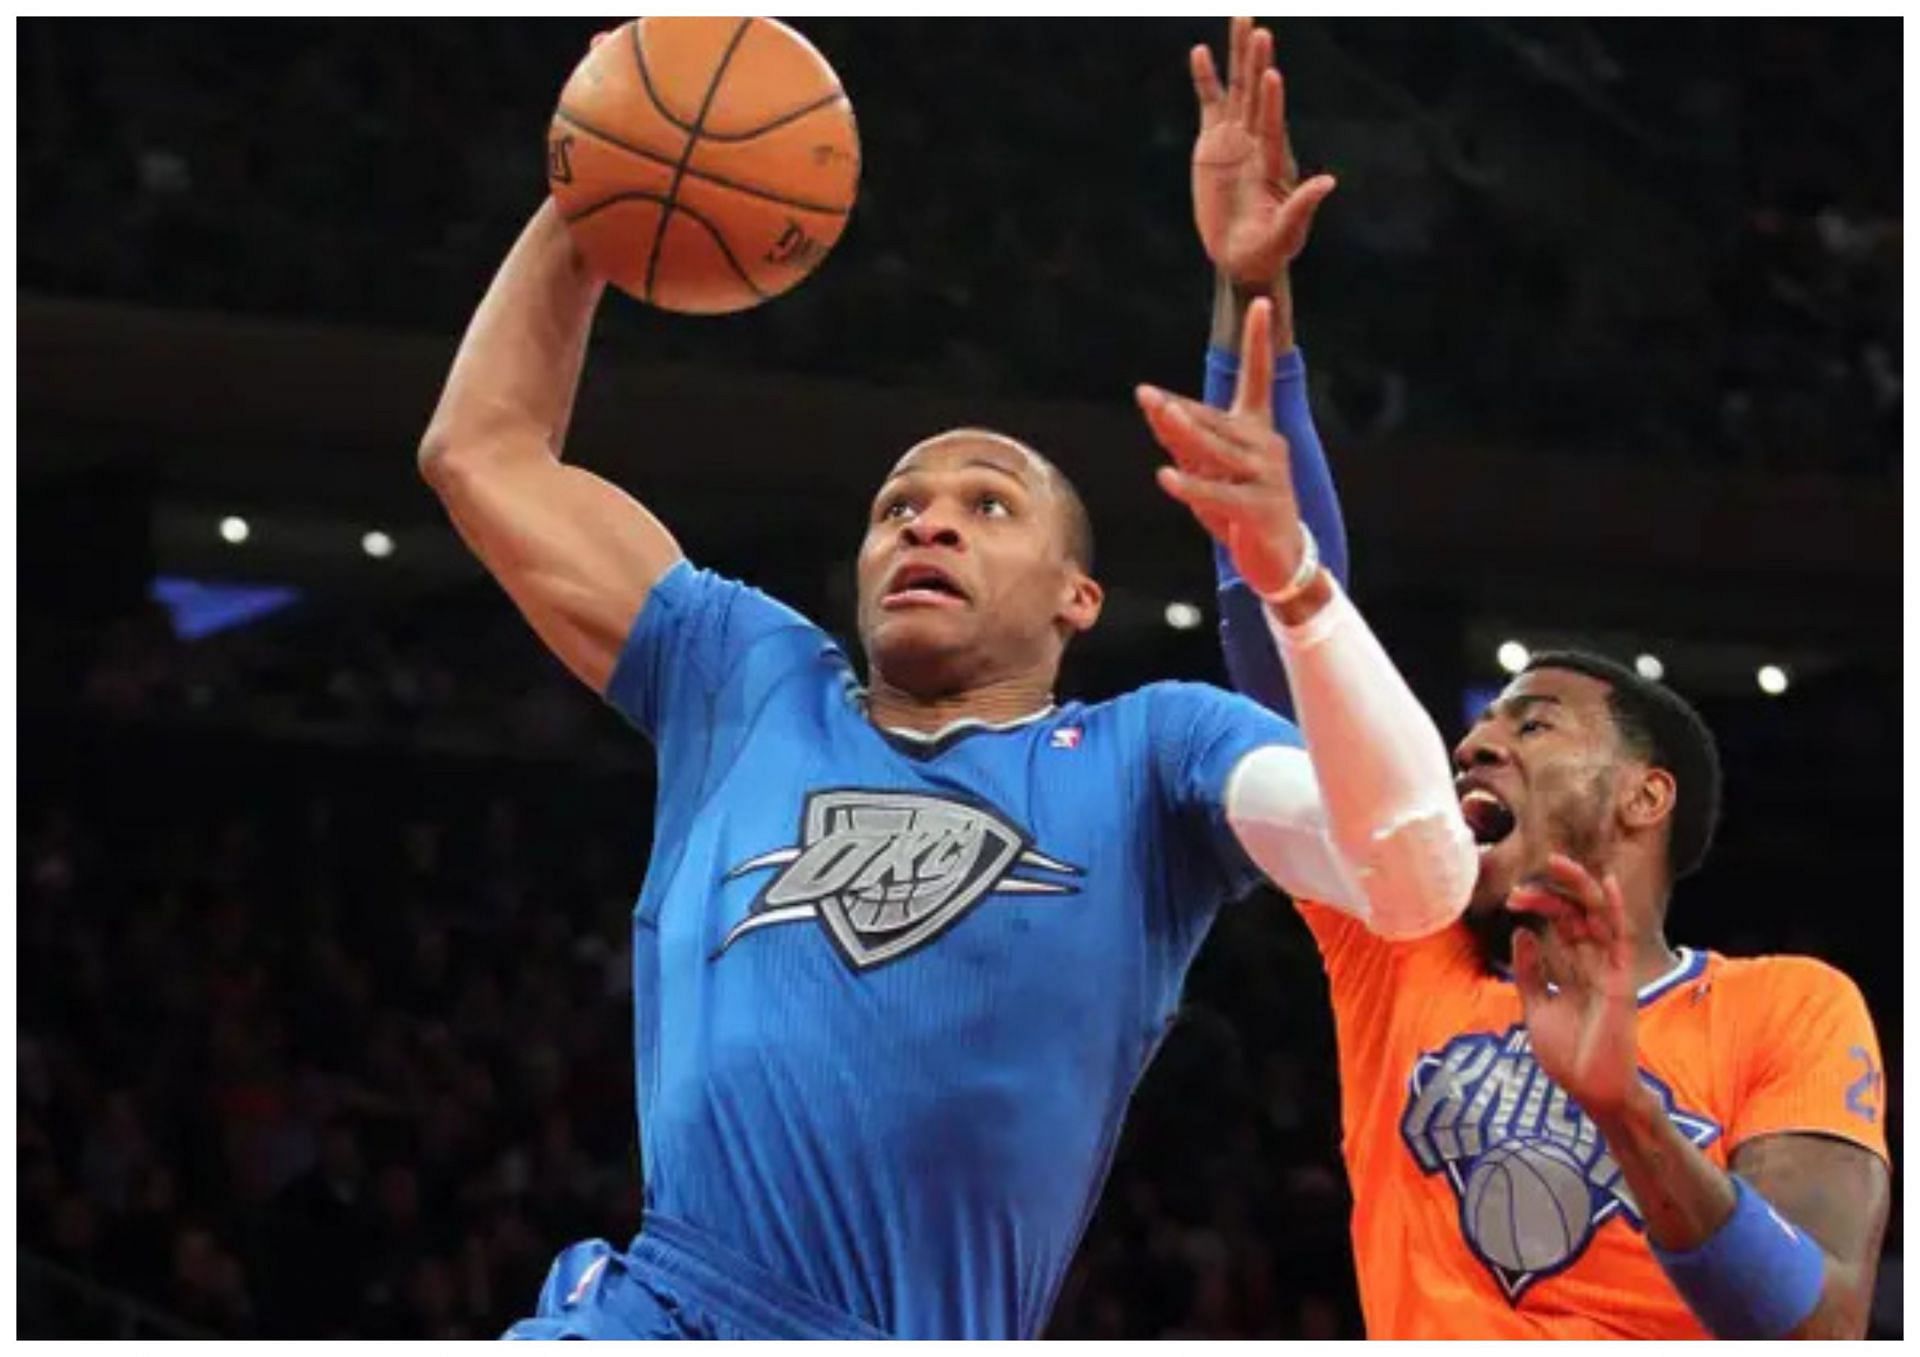 OKC Thunder vs. New York Knicks (Photo credit: BRAD PENNER, USA TODAY SPORTS)